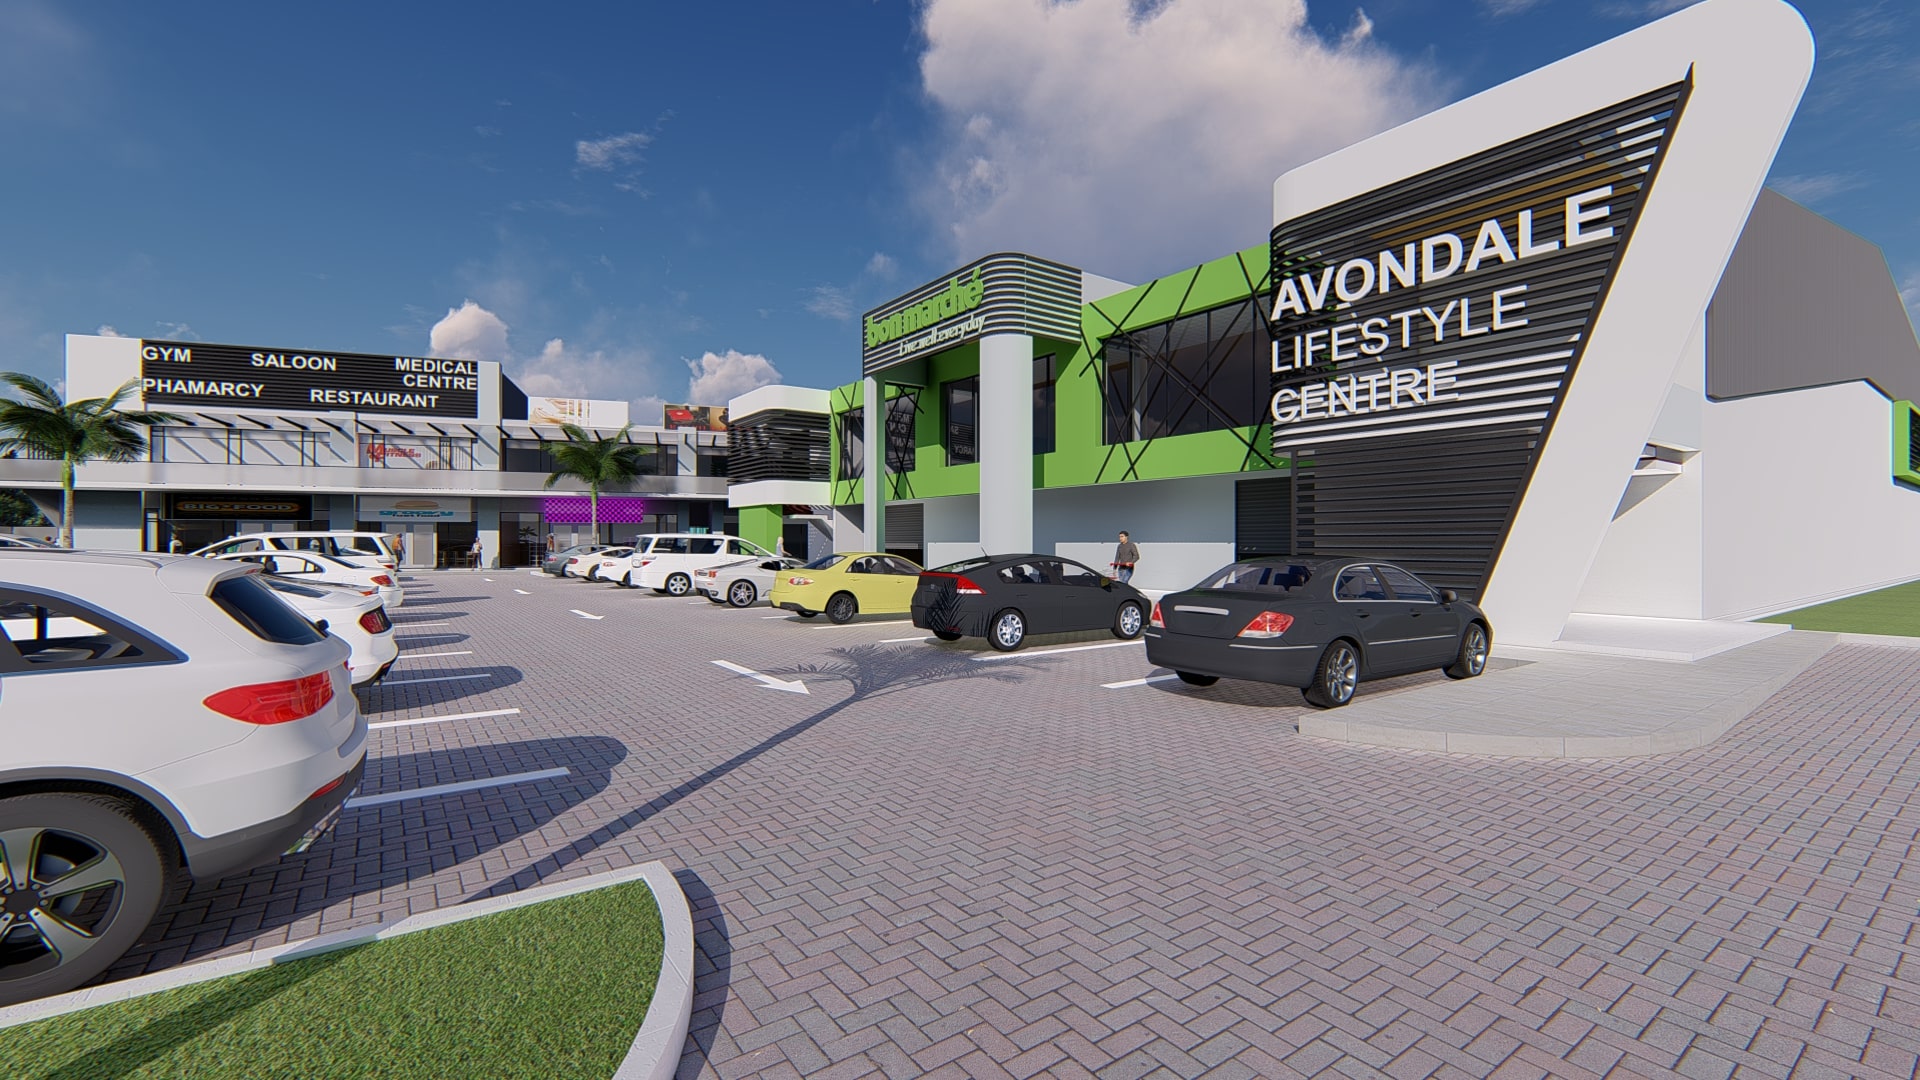 Avondale Lifestyle Centre, Harare (2020)